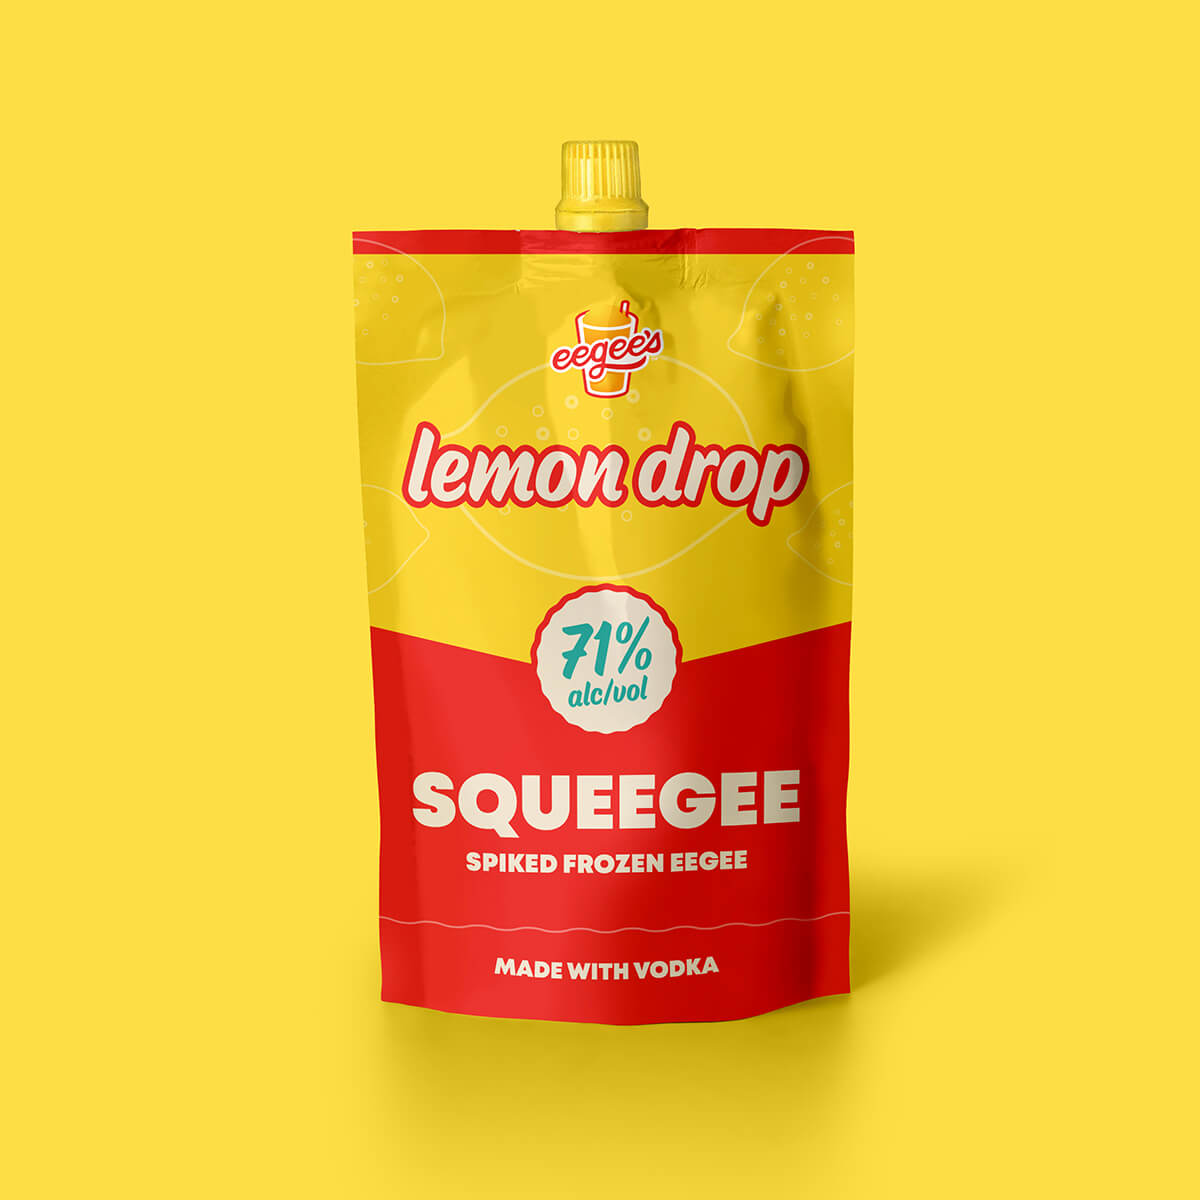 eegee's Lemon drop Squeegee